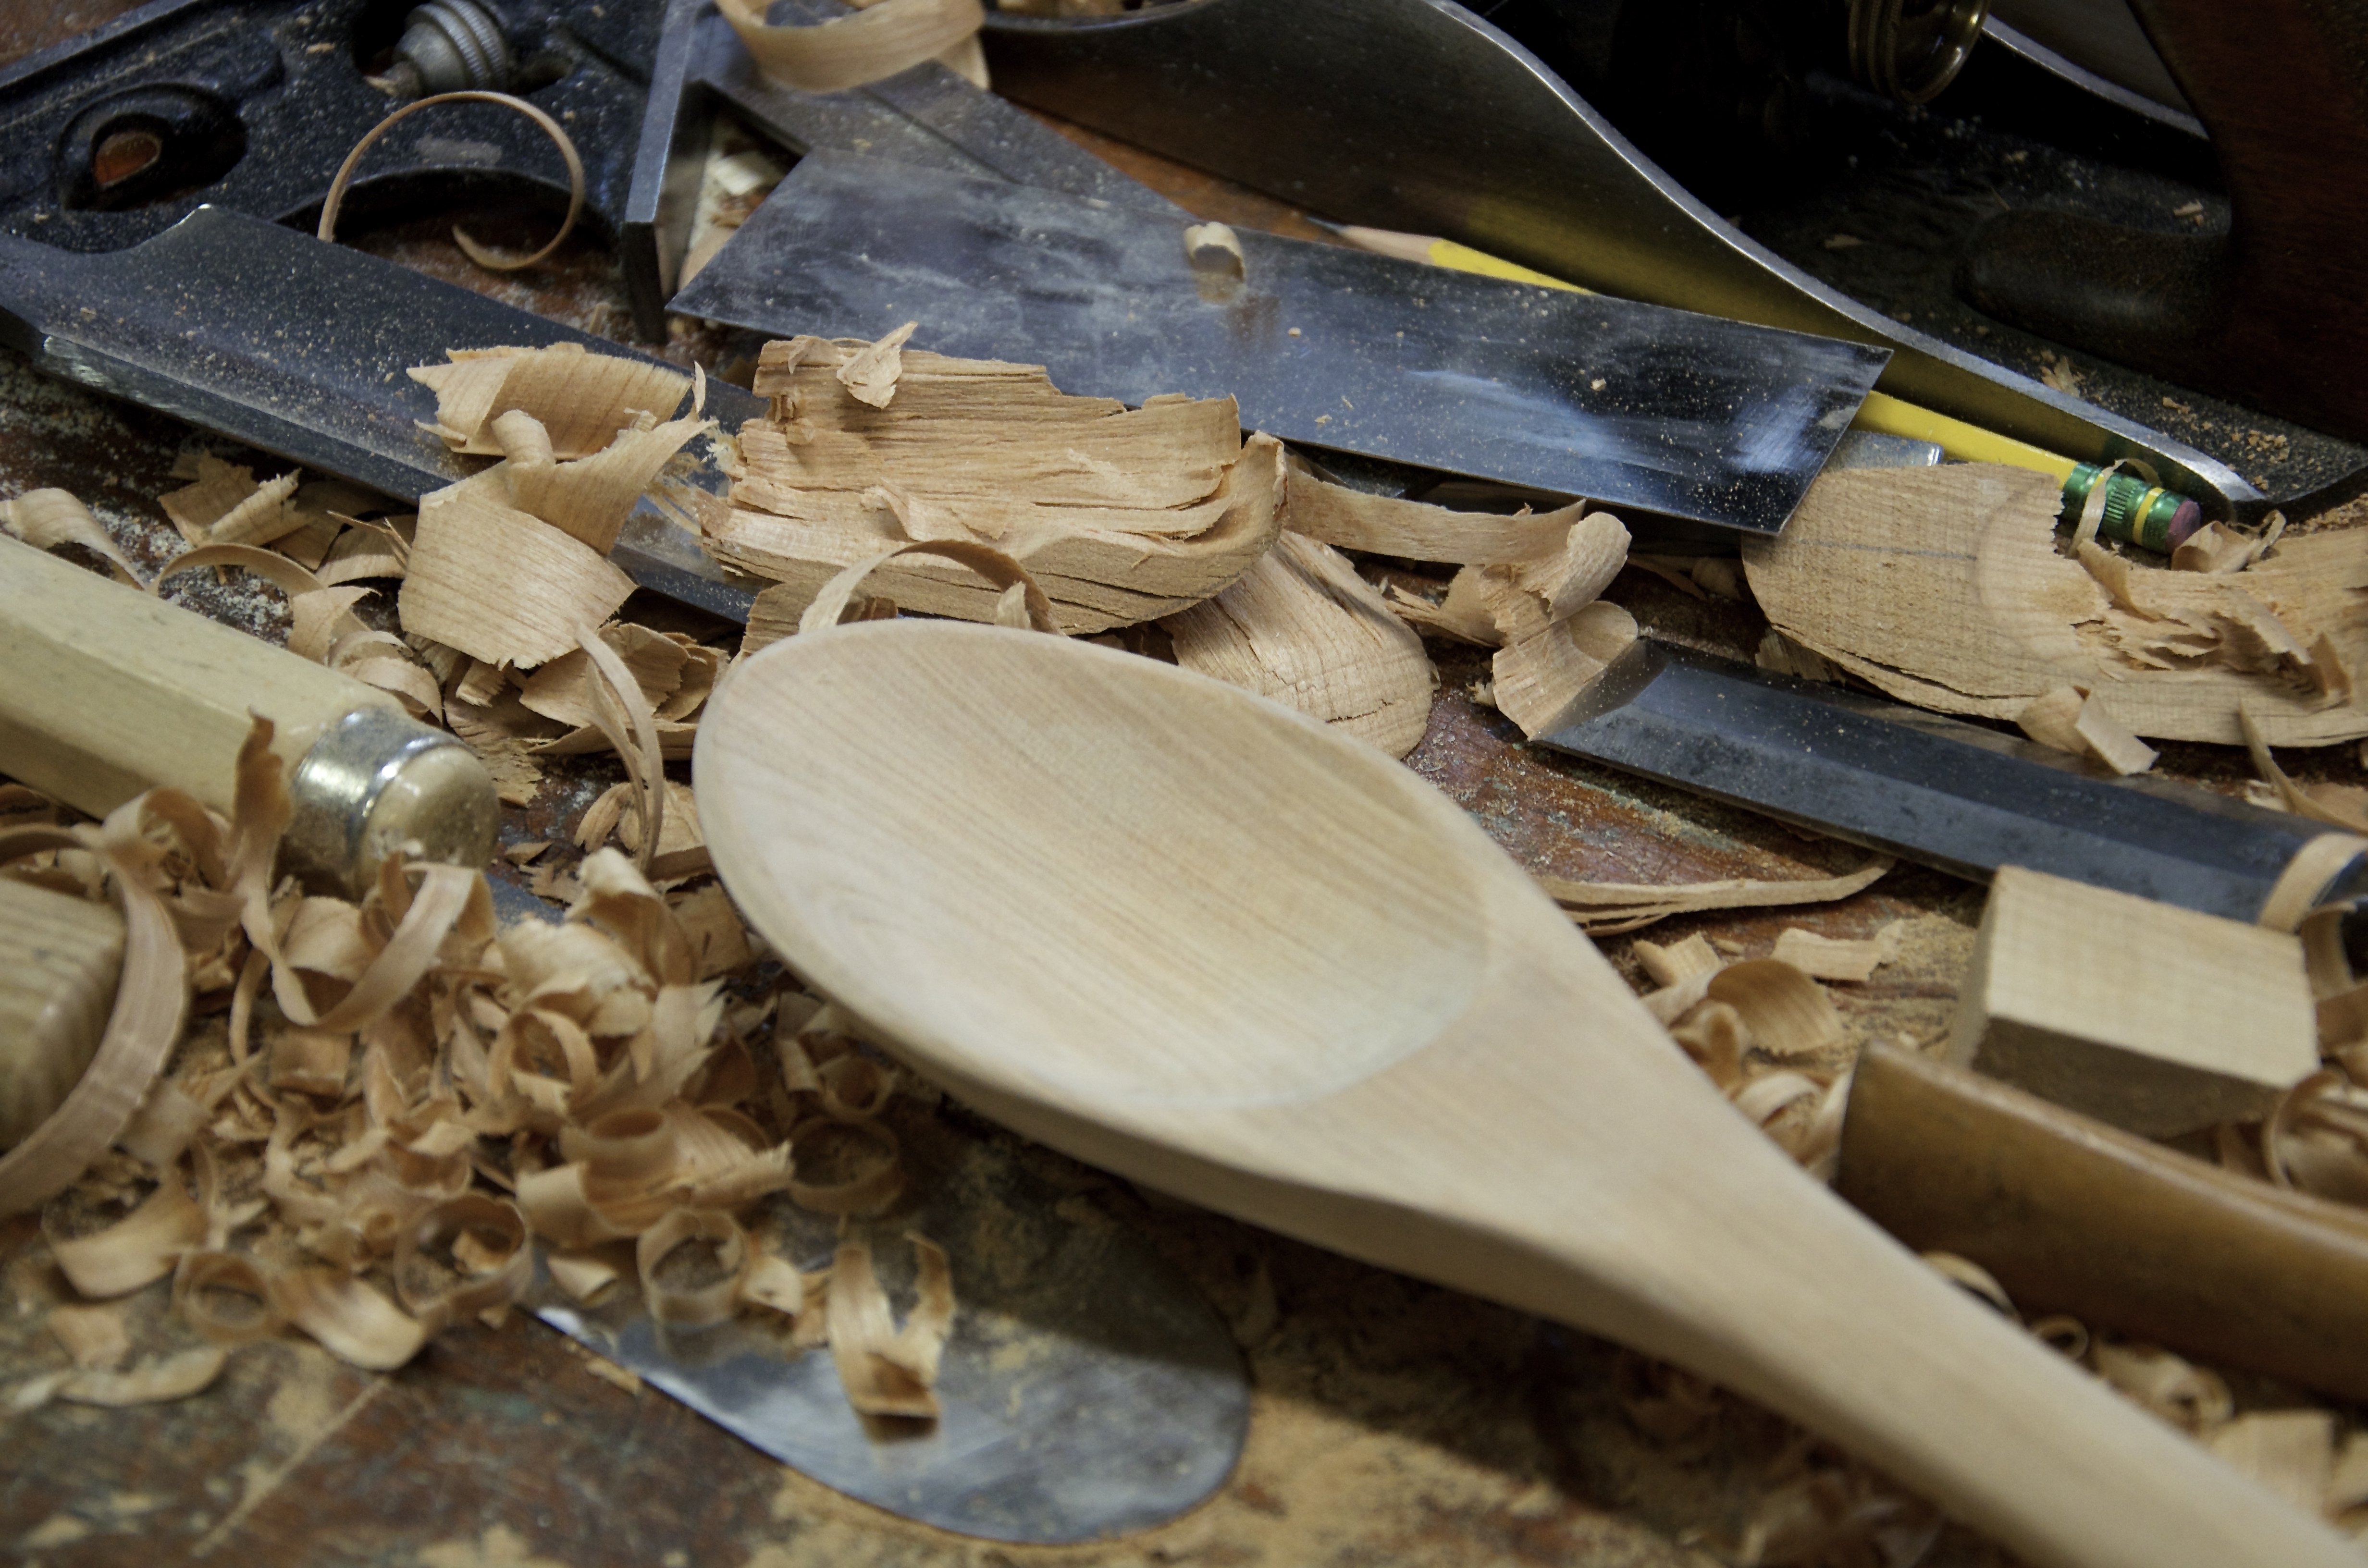 6 pieces woodworking carving knife, wood sharpener, wood scraper, spoon  knife DIY woodworking pattern carving tool set